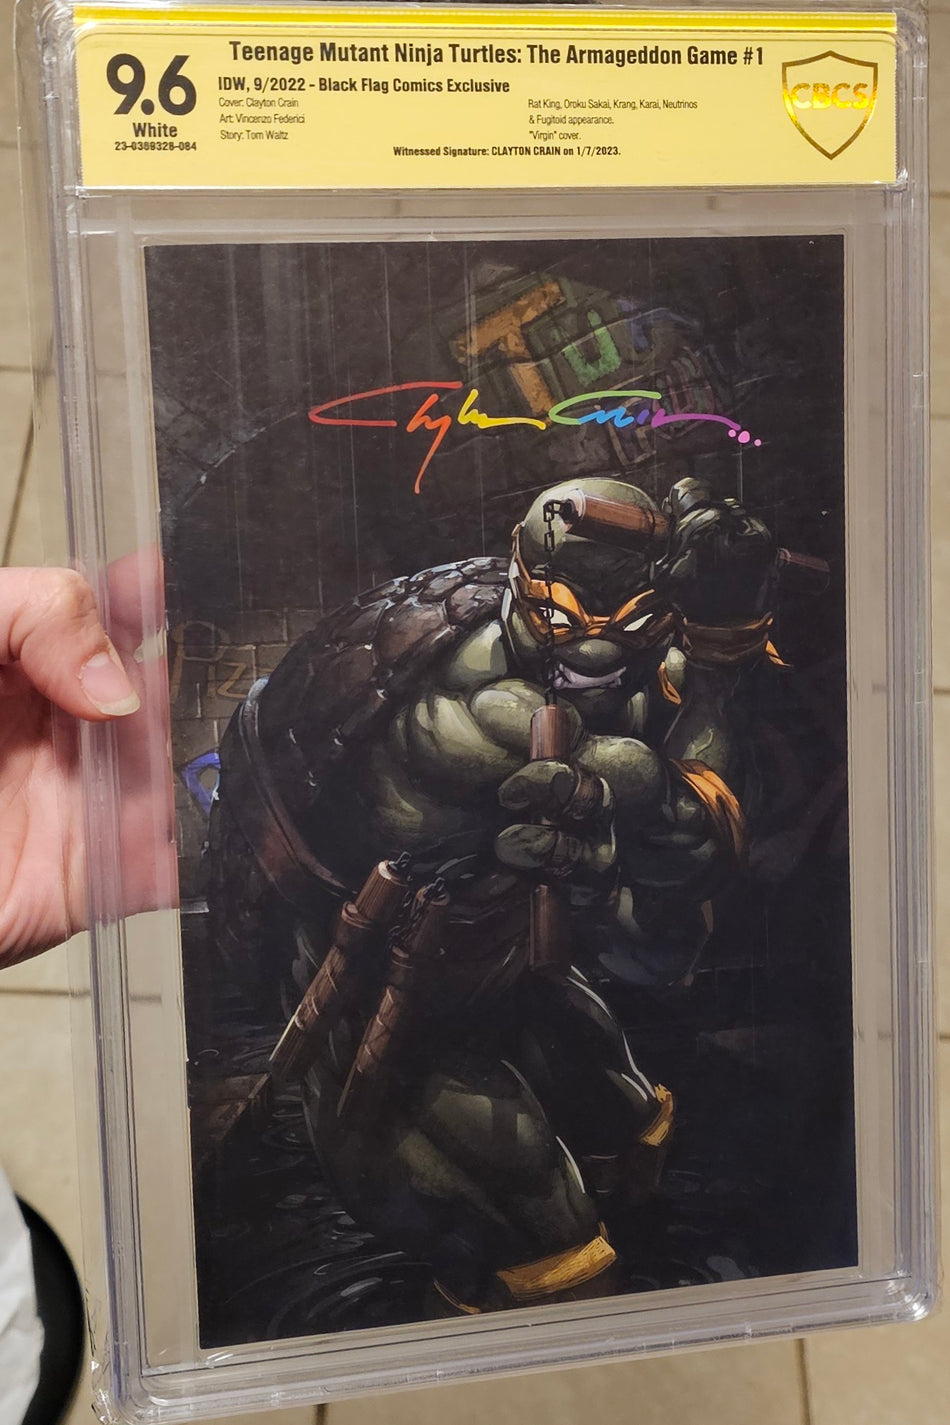 Teenage Mutant Ninja Turtles TMNT Armageddon Game #1 Clayton Crain Exclusive CBCS 9.6 WITNESSED SIGNATURE by Clayon Crain